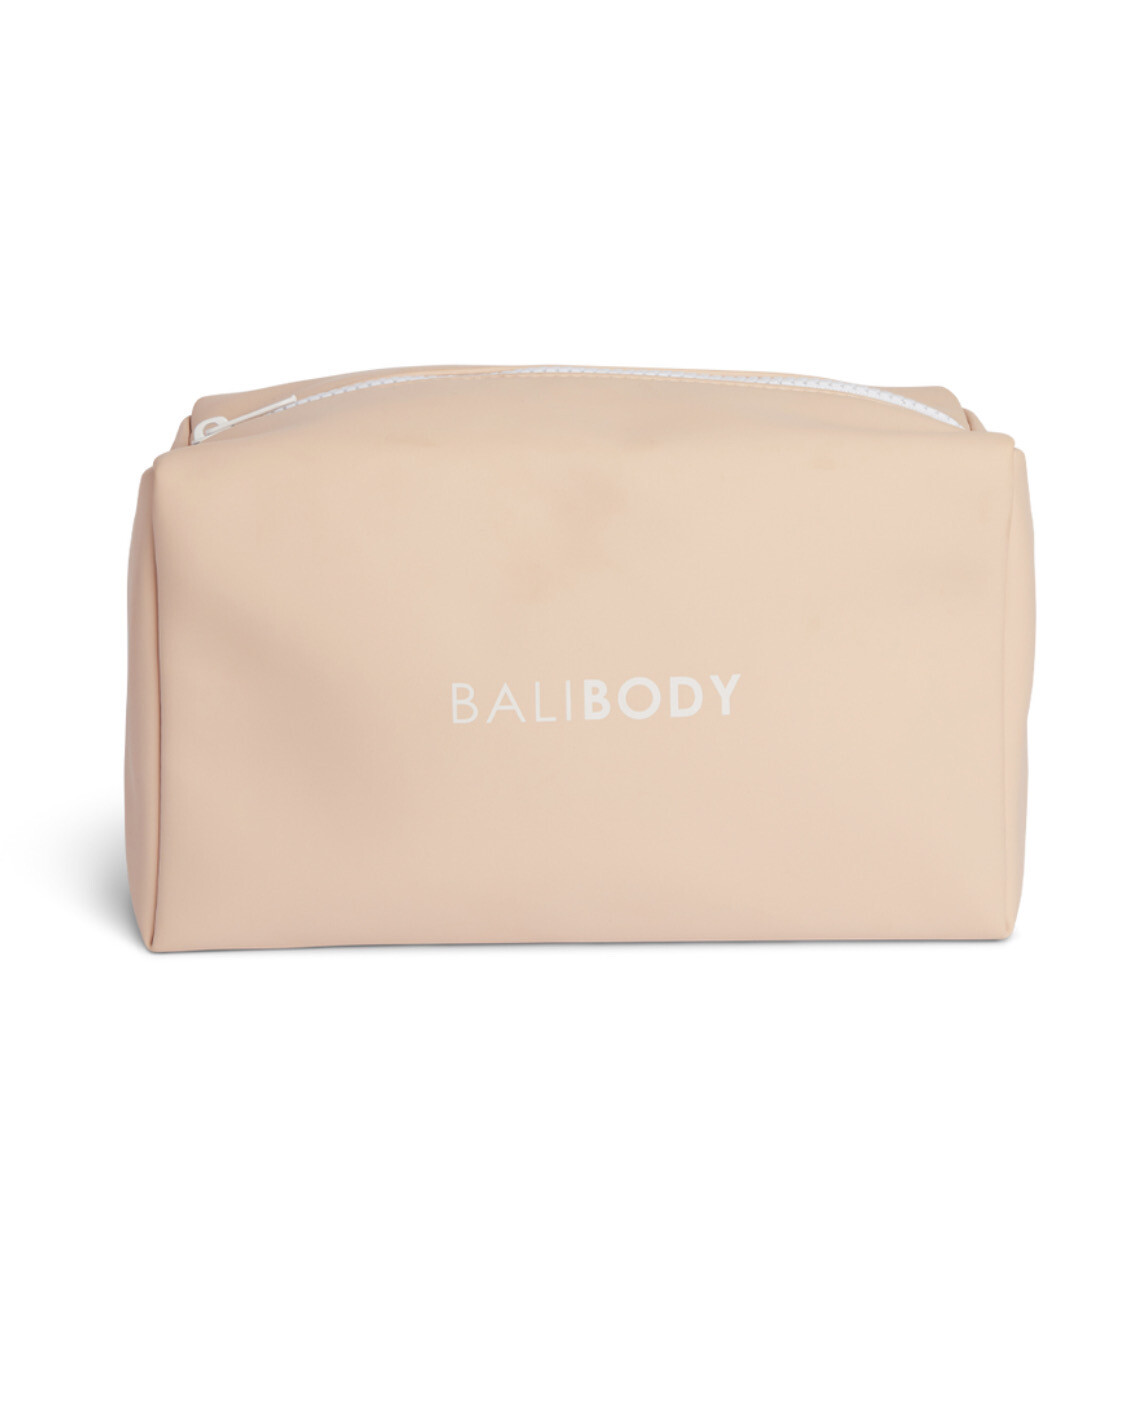 Bali Body - Exclusive Cosmetic Bag